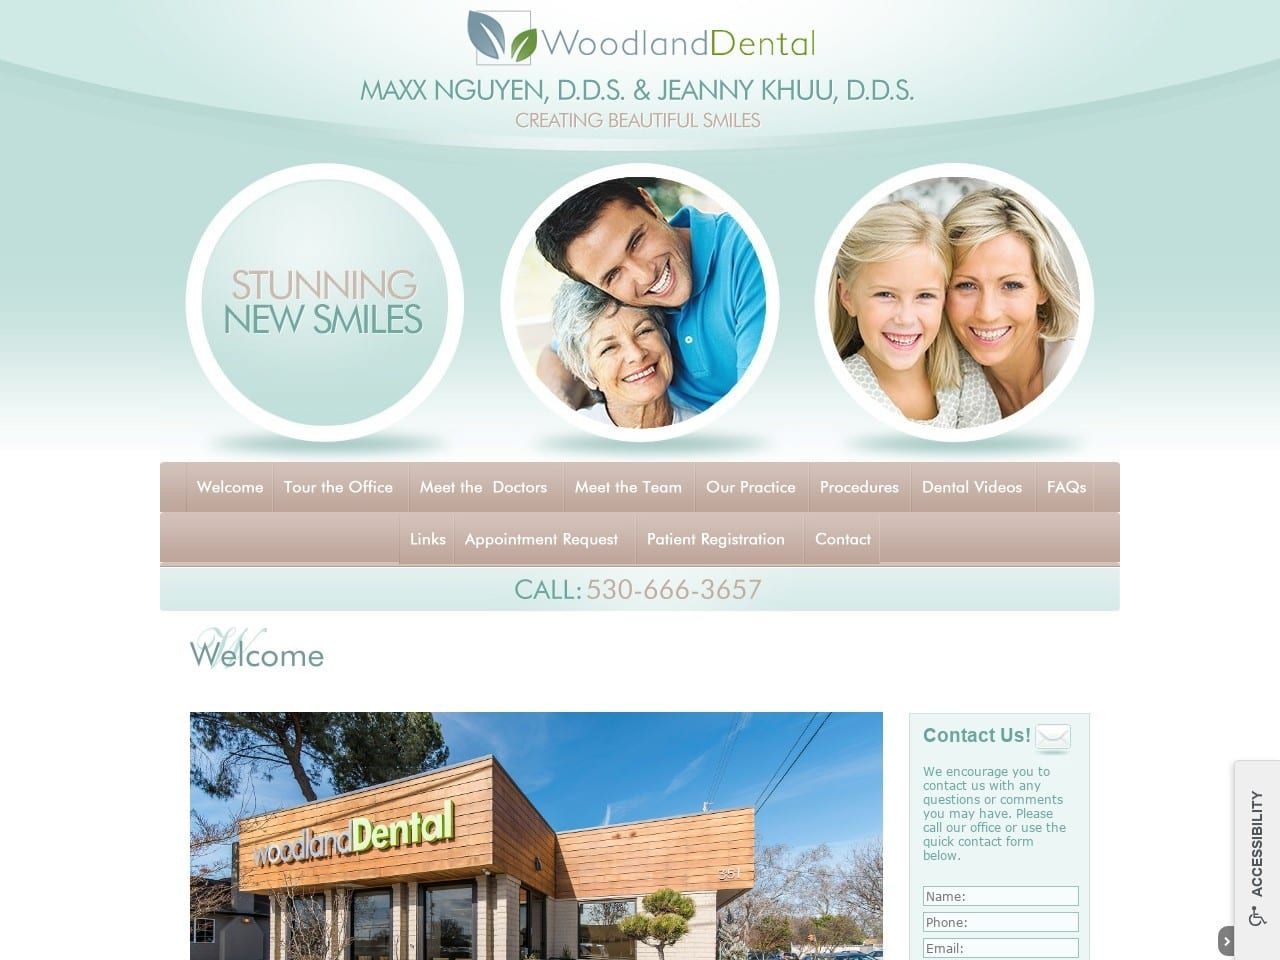 Woodland Dental Website Screenshot from woodlanddentalcare.com